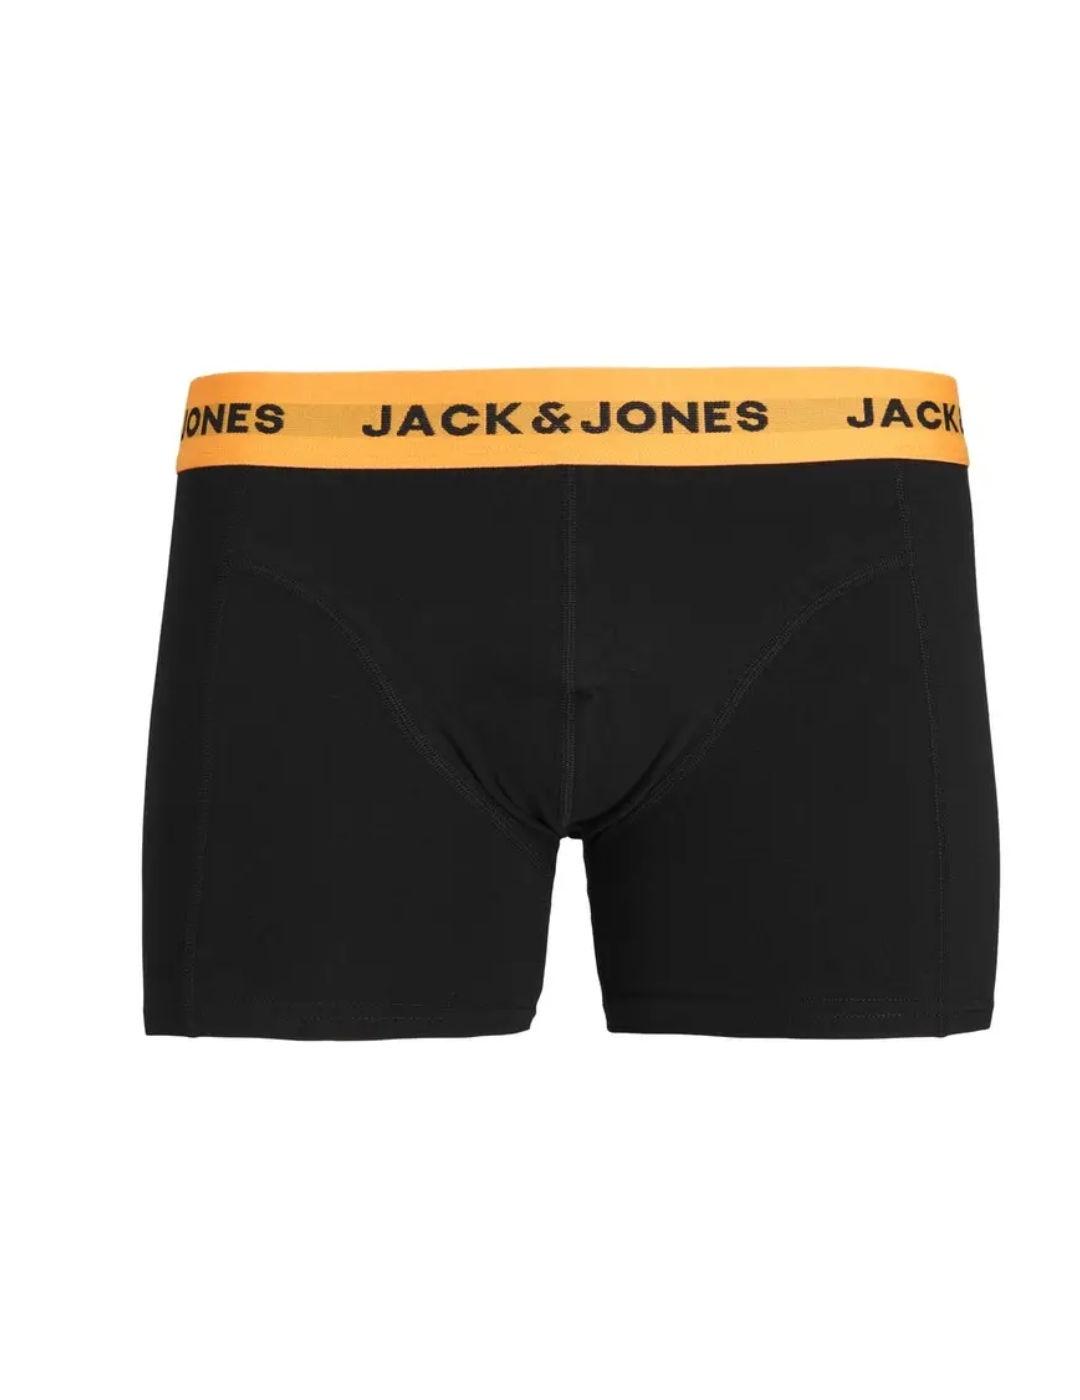 Pack de 3 íntimos Jack&Jones negro/ amarillo de hombre